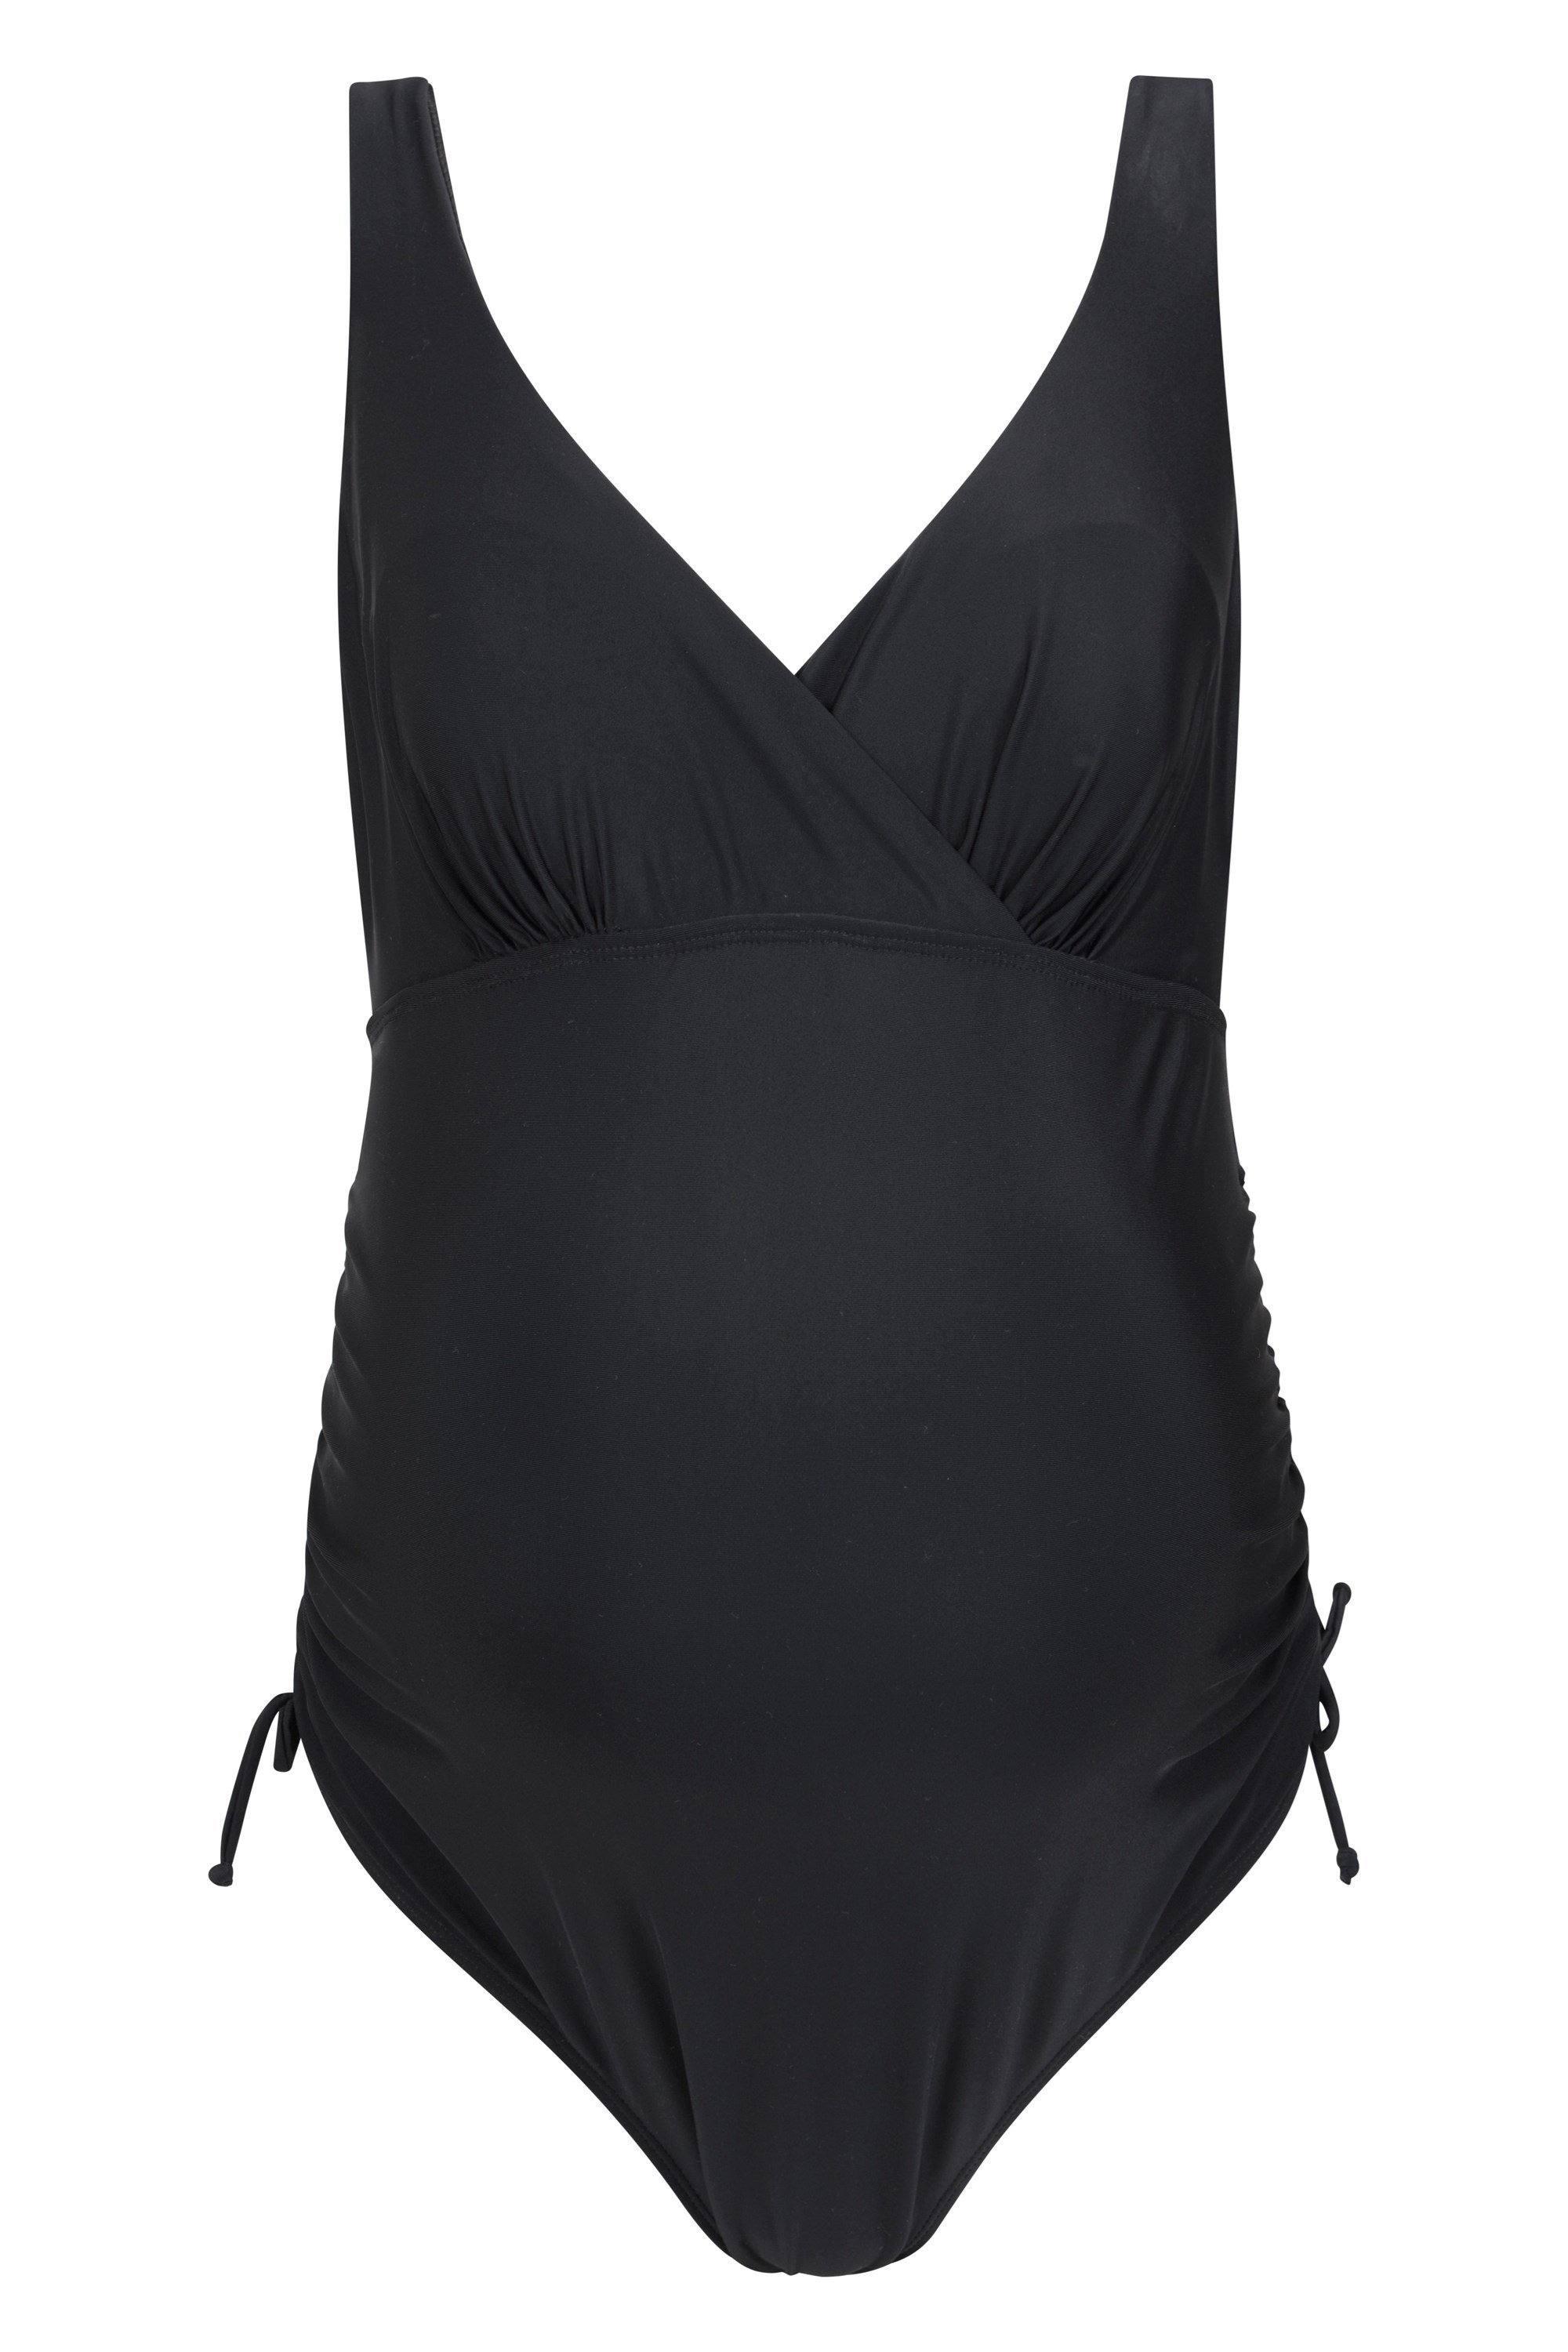 Quartz Womens Maternity Swimsuit - Black